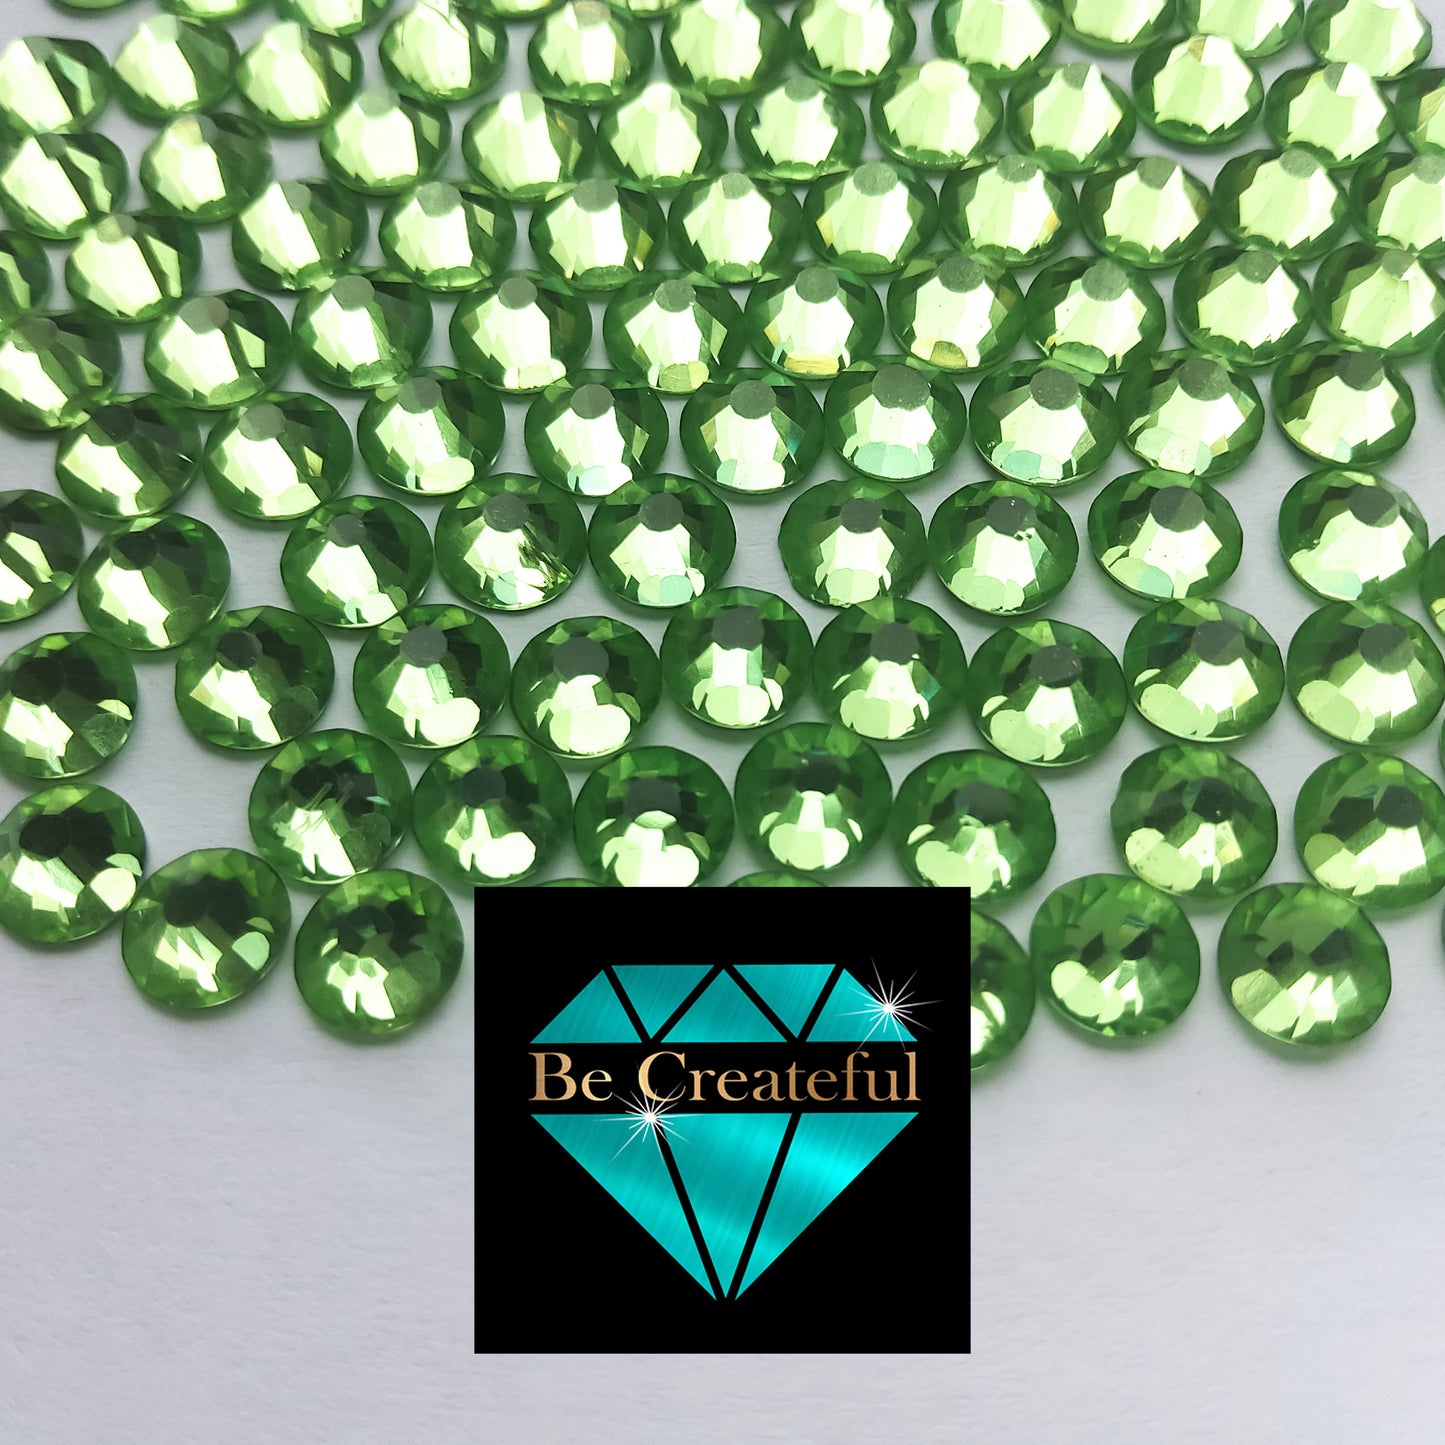 Be Createful LUXE® Peridot Green Hotfix Rhinestones are high-quality glass Rhinestone that provides intense sparkle